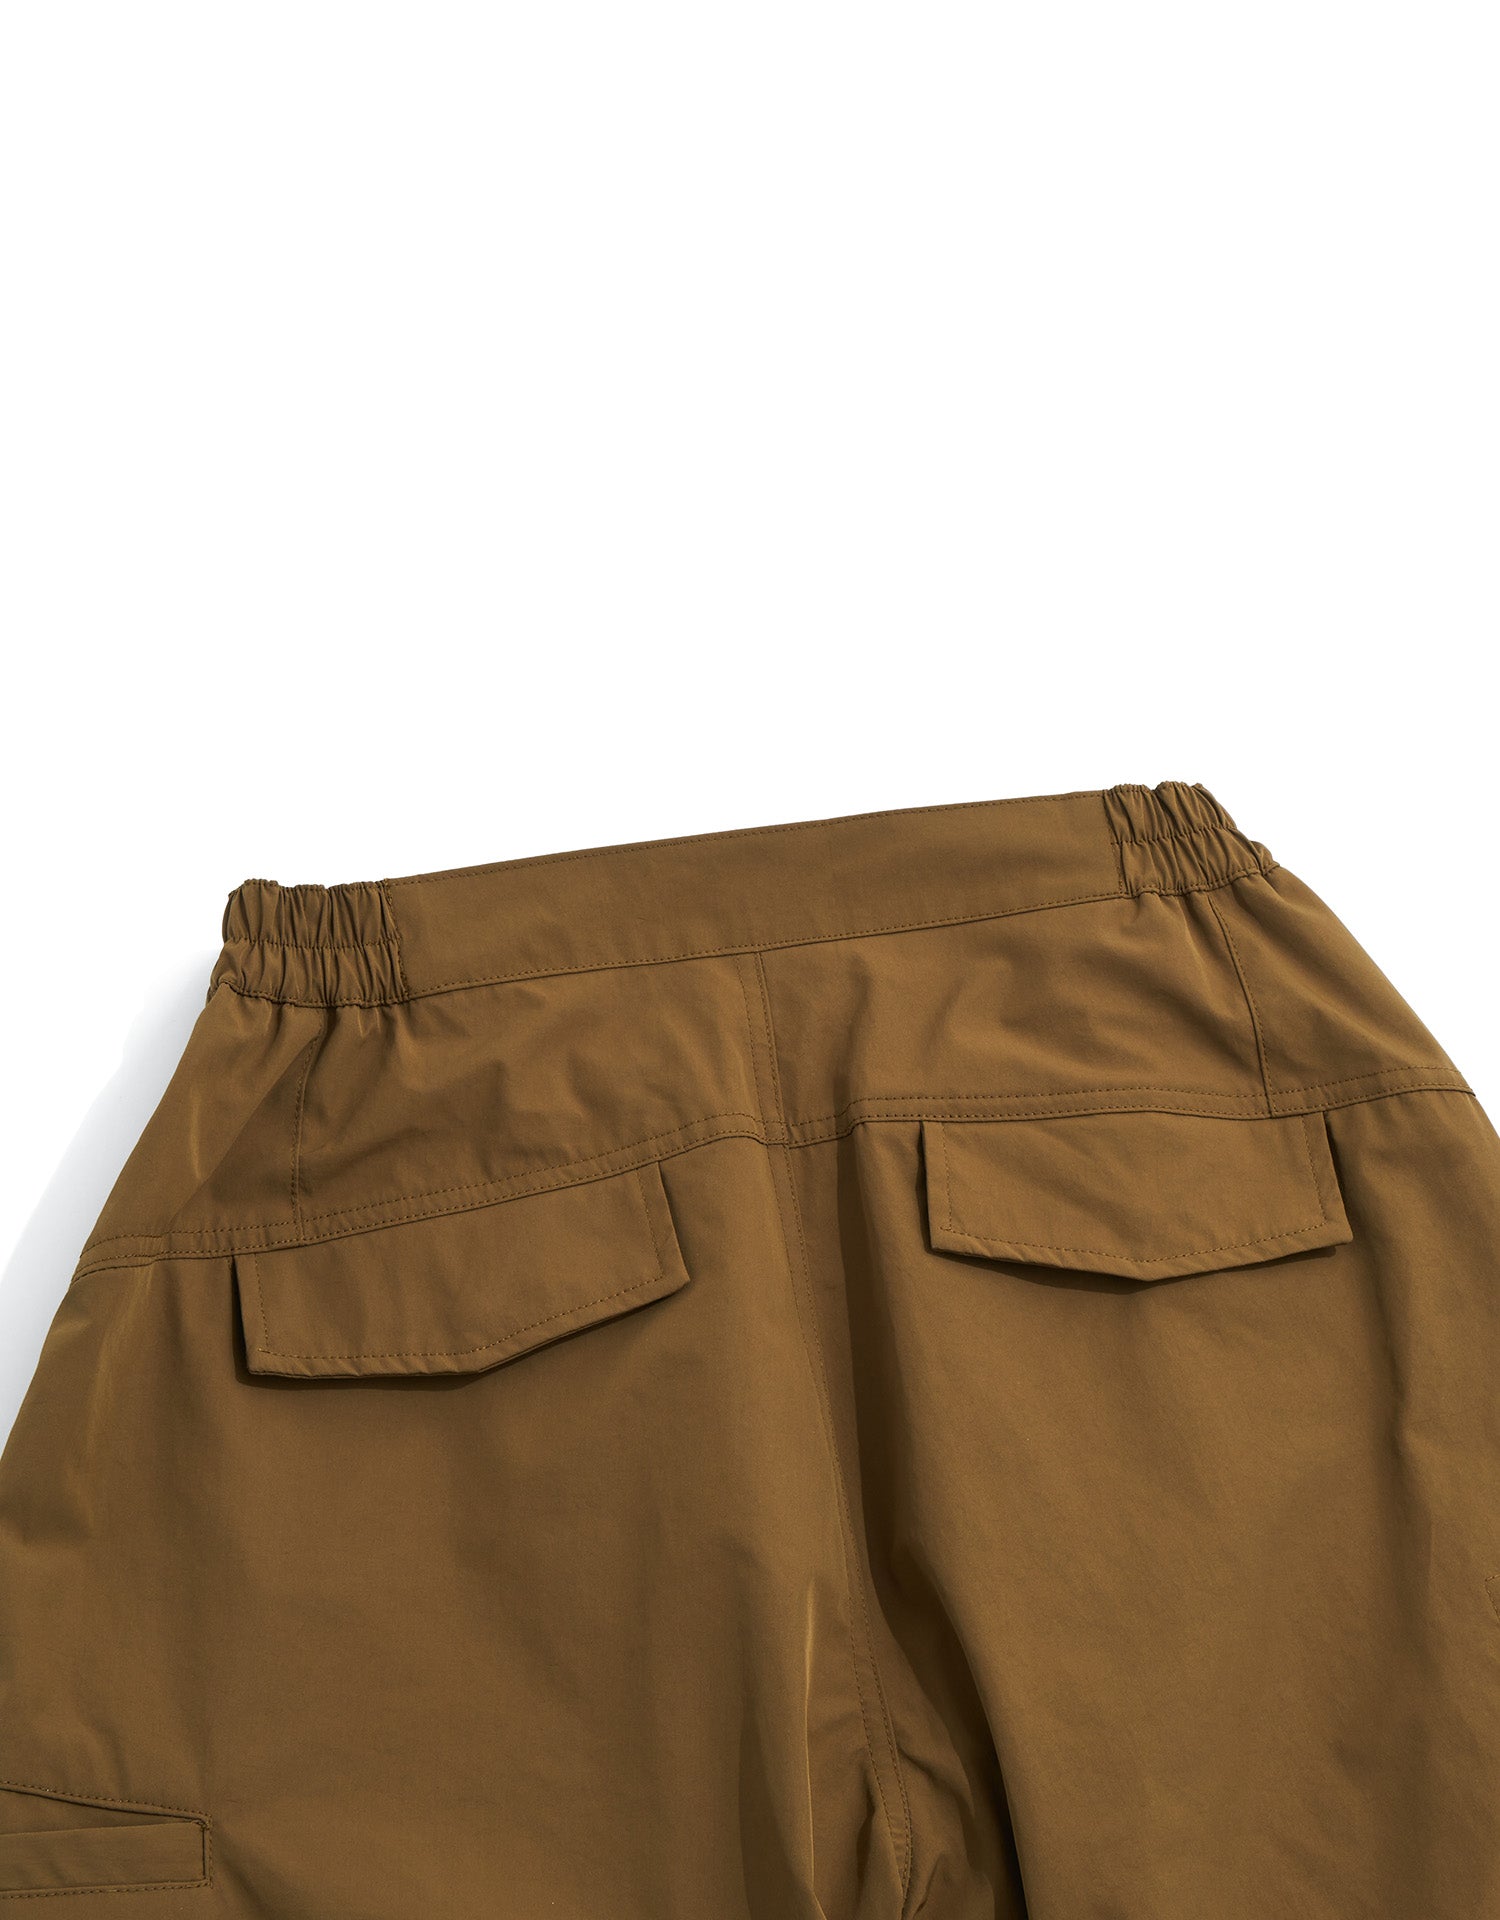 TopBasics Adventure Series Six Pockets Cargo Pants